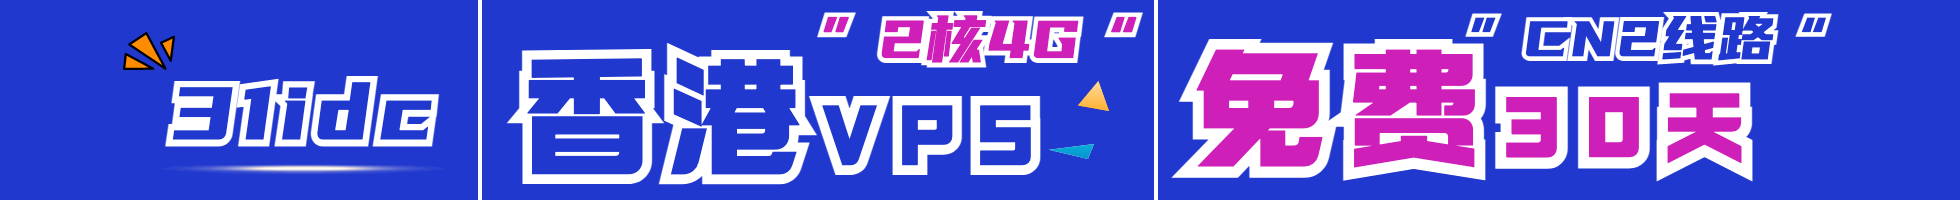 vps.us，国外特价VPS低至$9.9/月，全球超12个机房可选/美国/新加坡/德国等数据中心，1Gbps带宽/不限流量